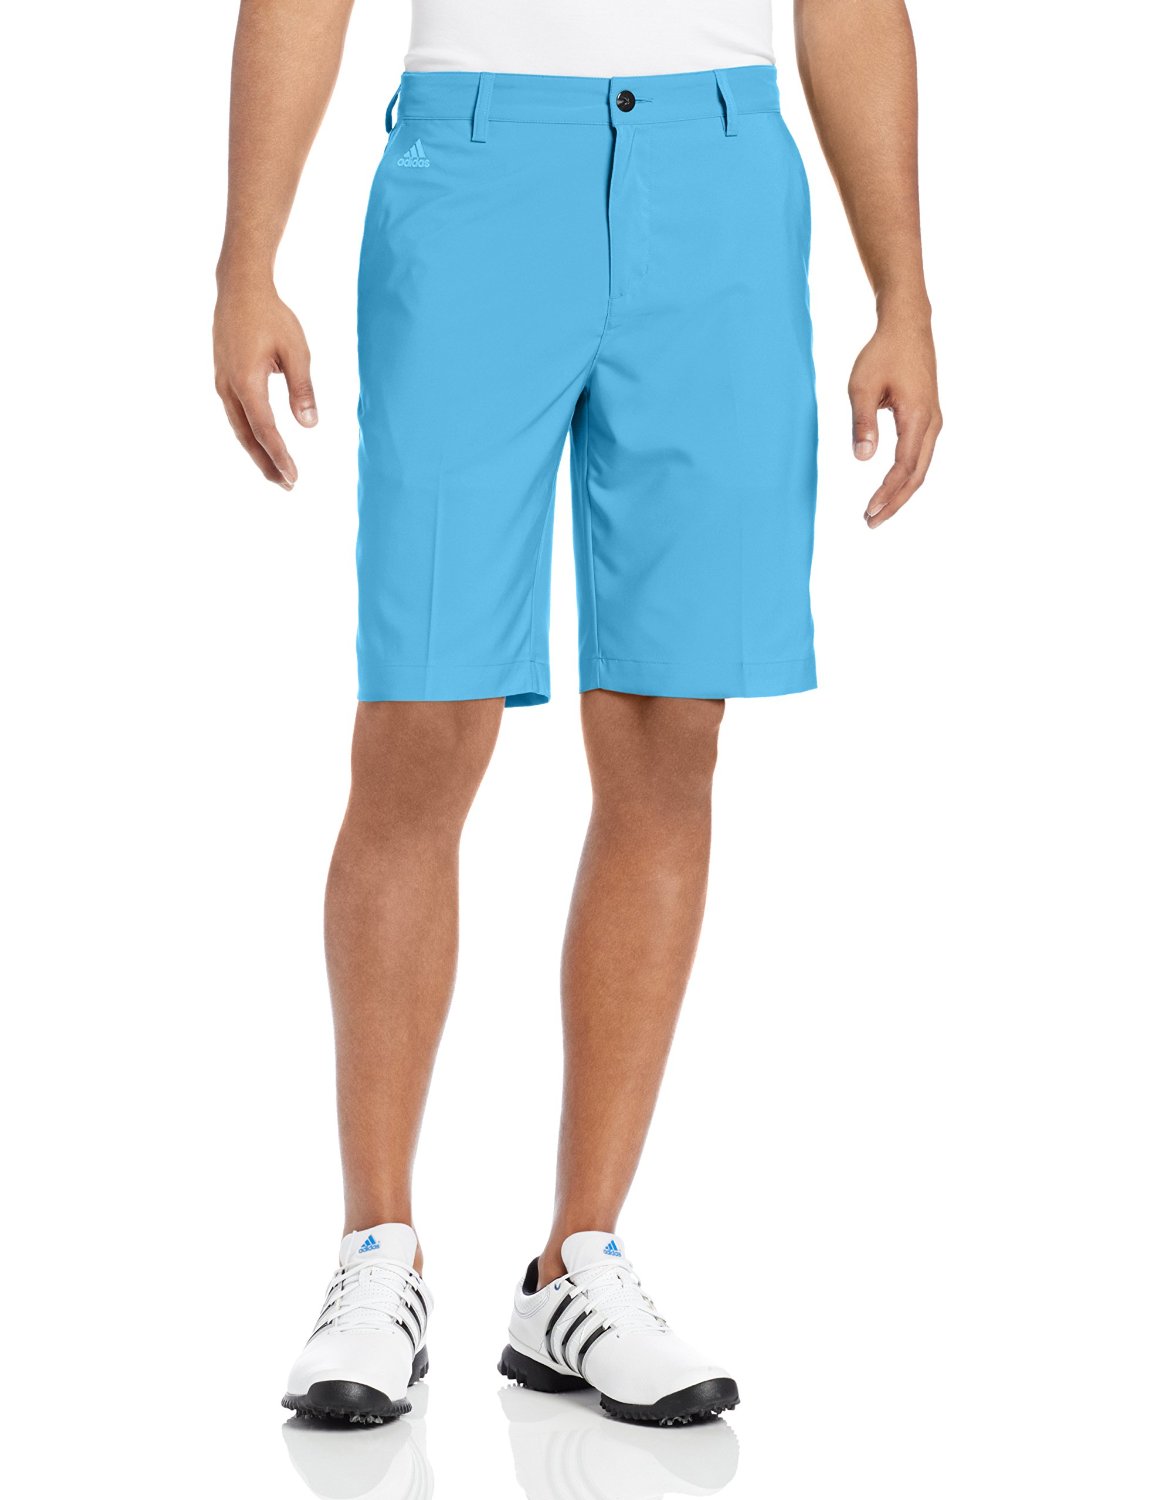 Adidas Mens Climalite 3-Stripes Tech Shorts